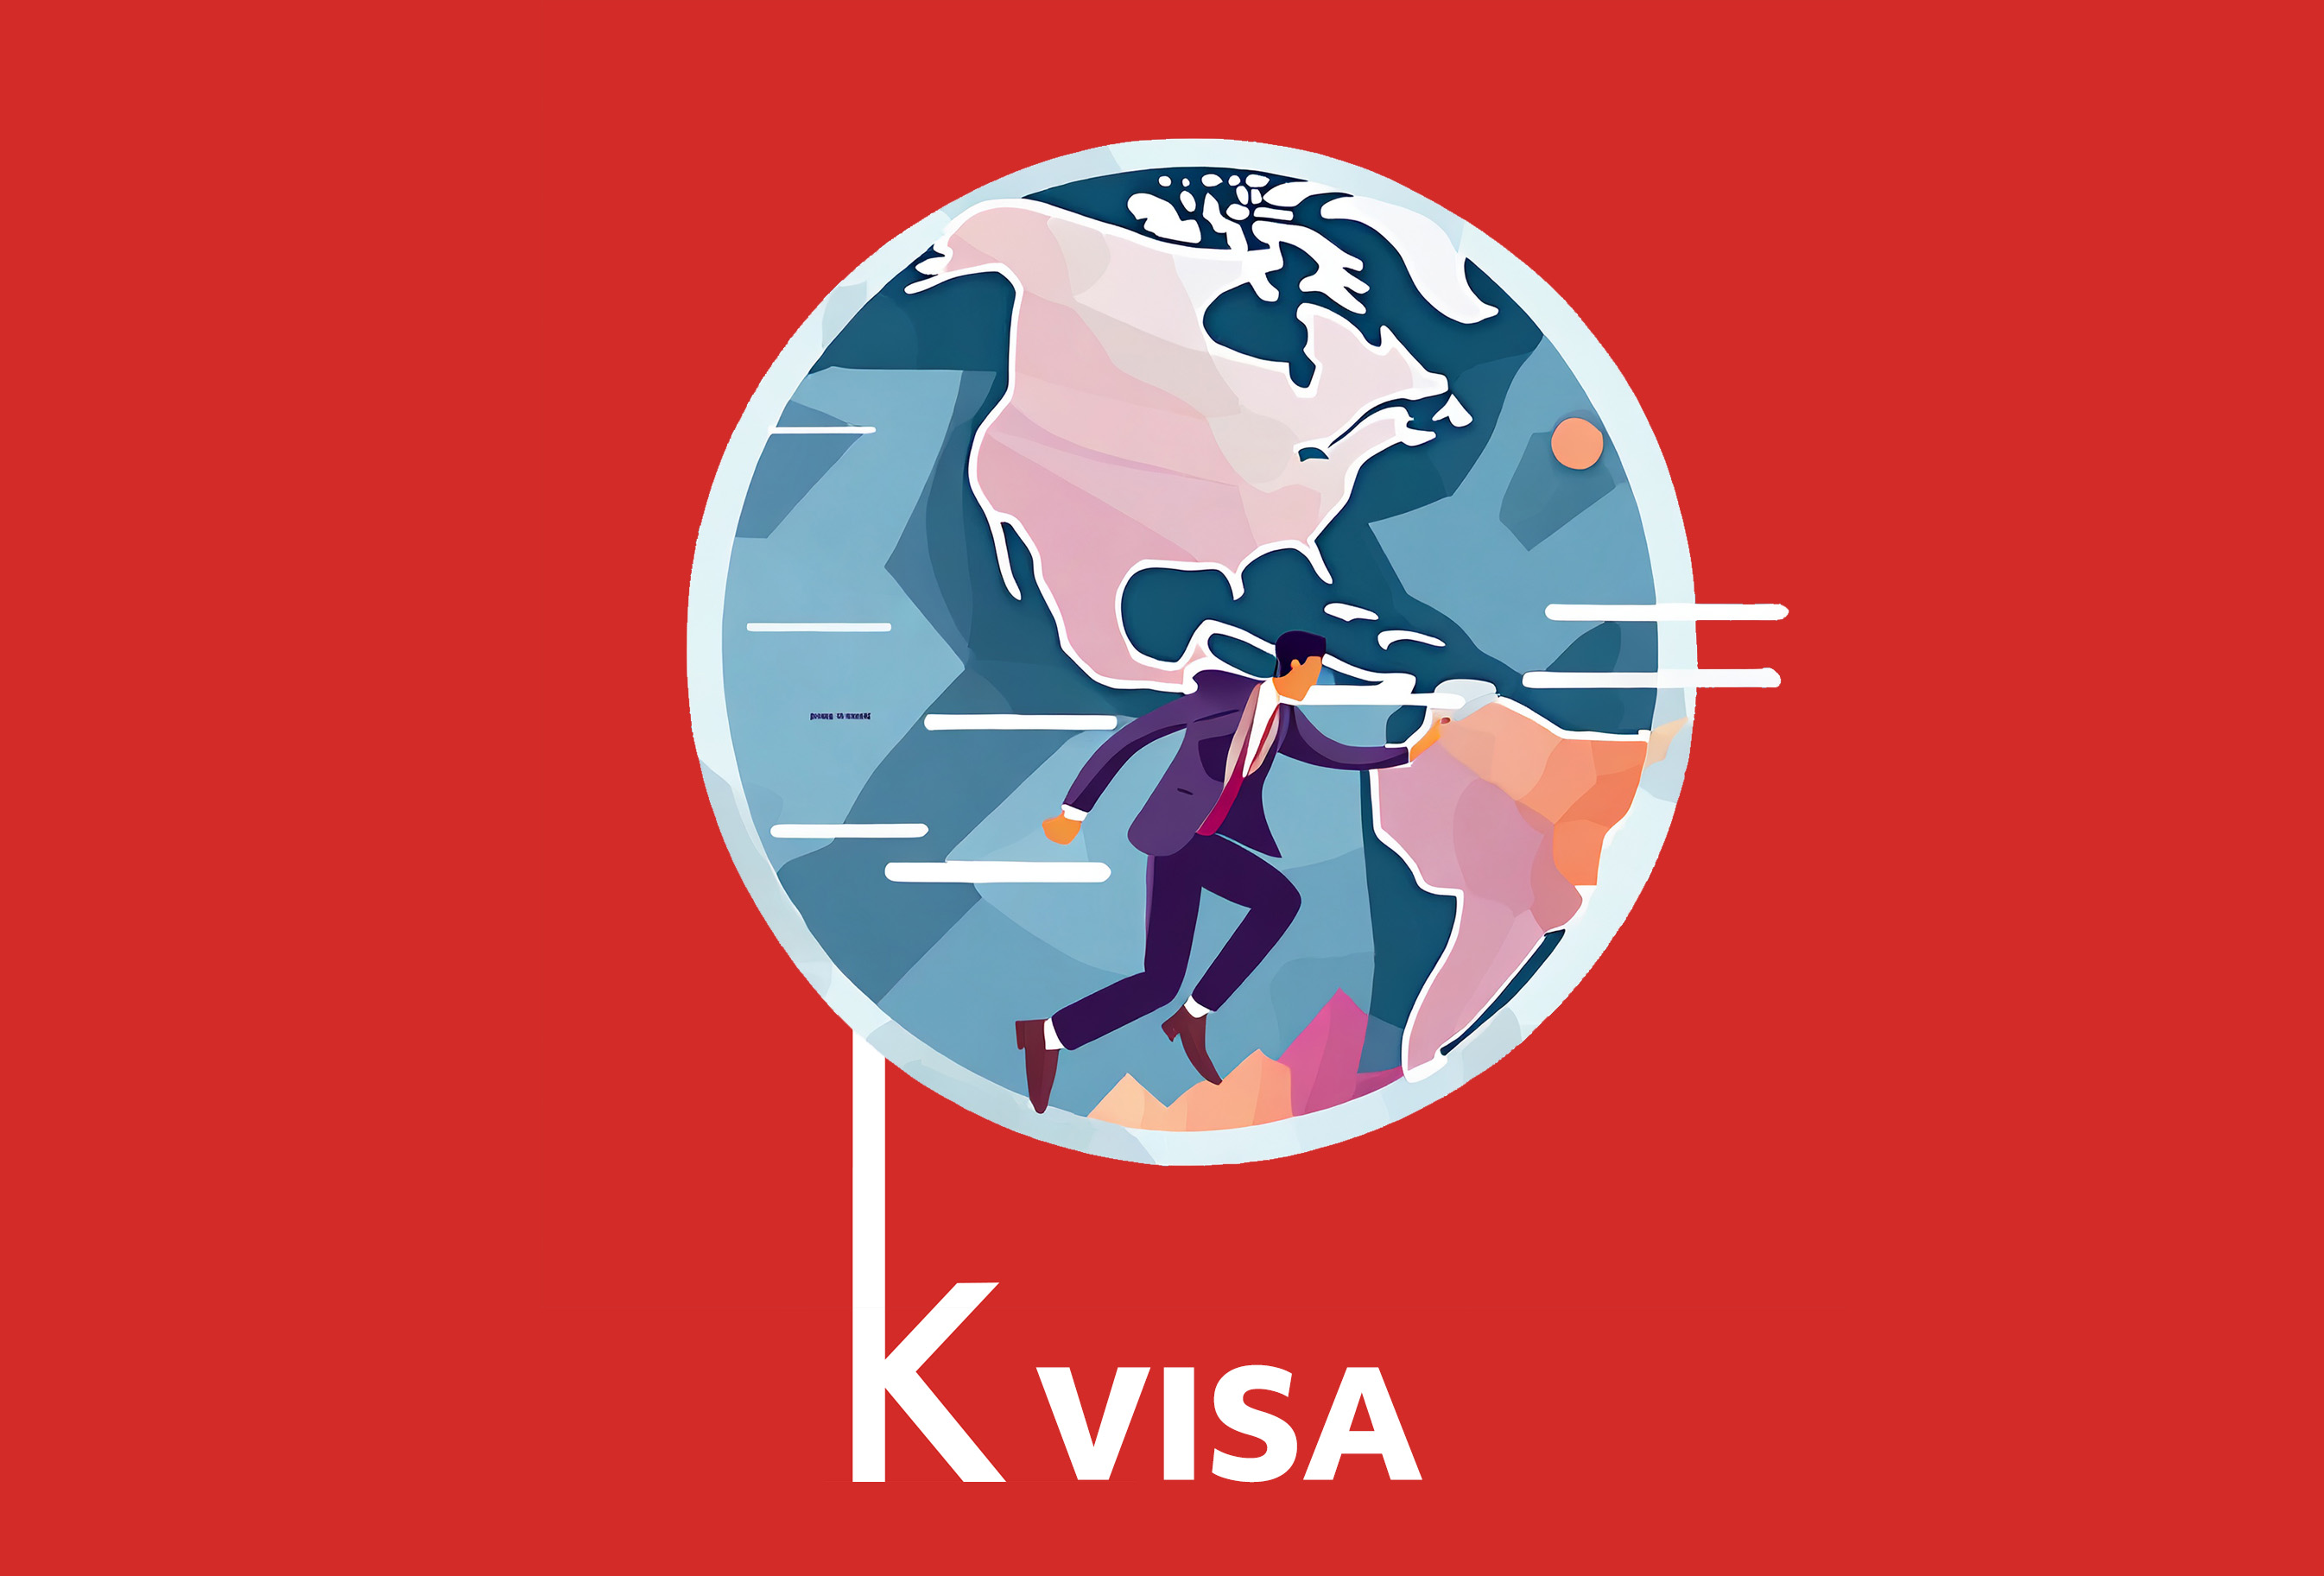 D-7 Visa profile.jpg